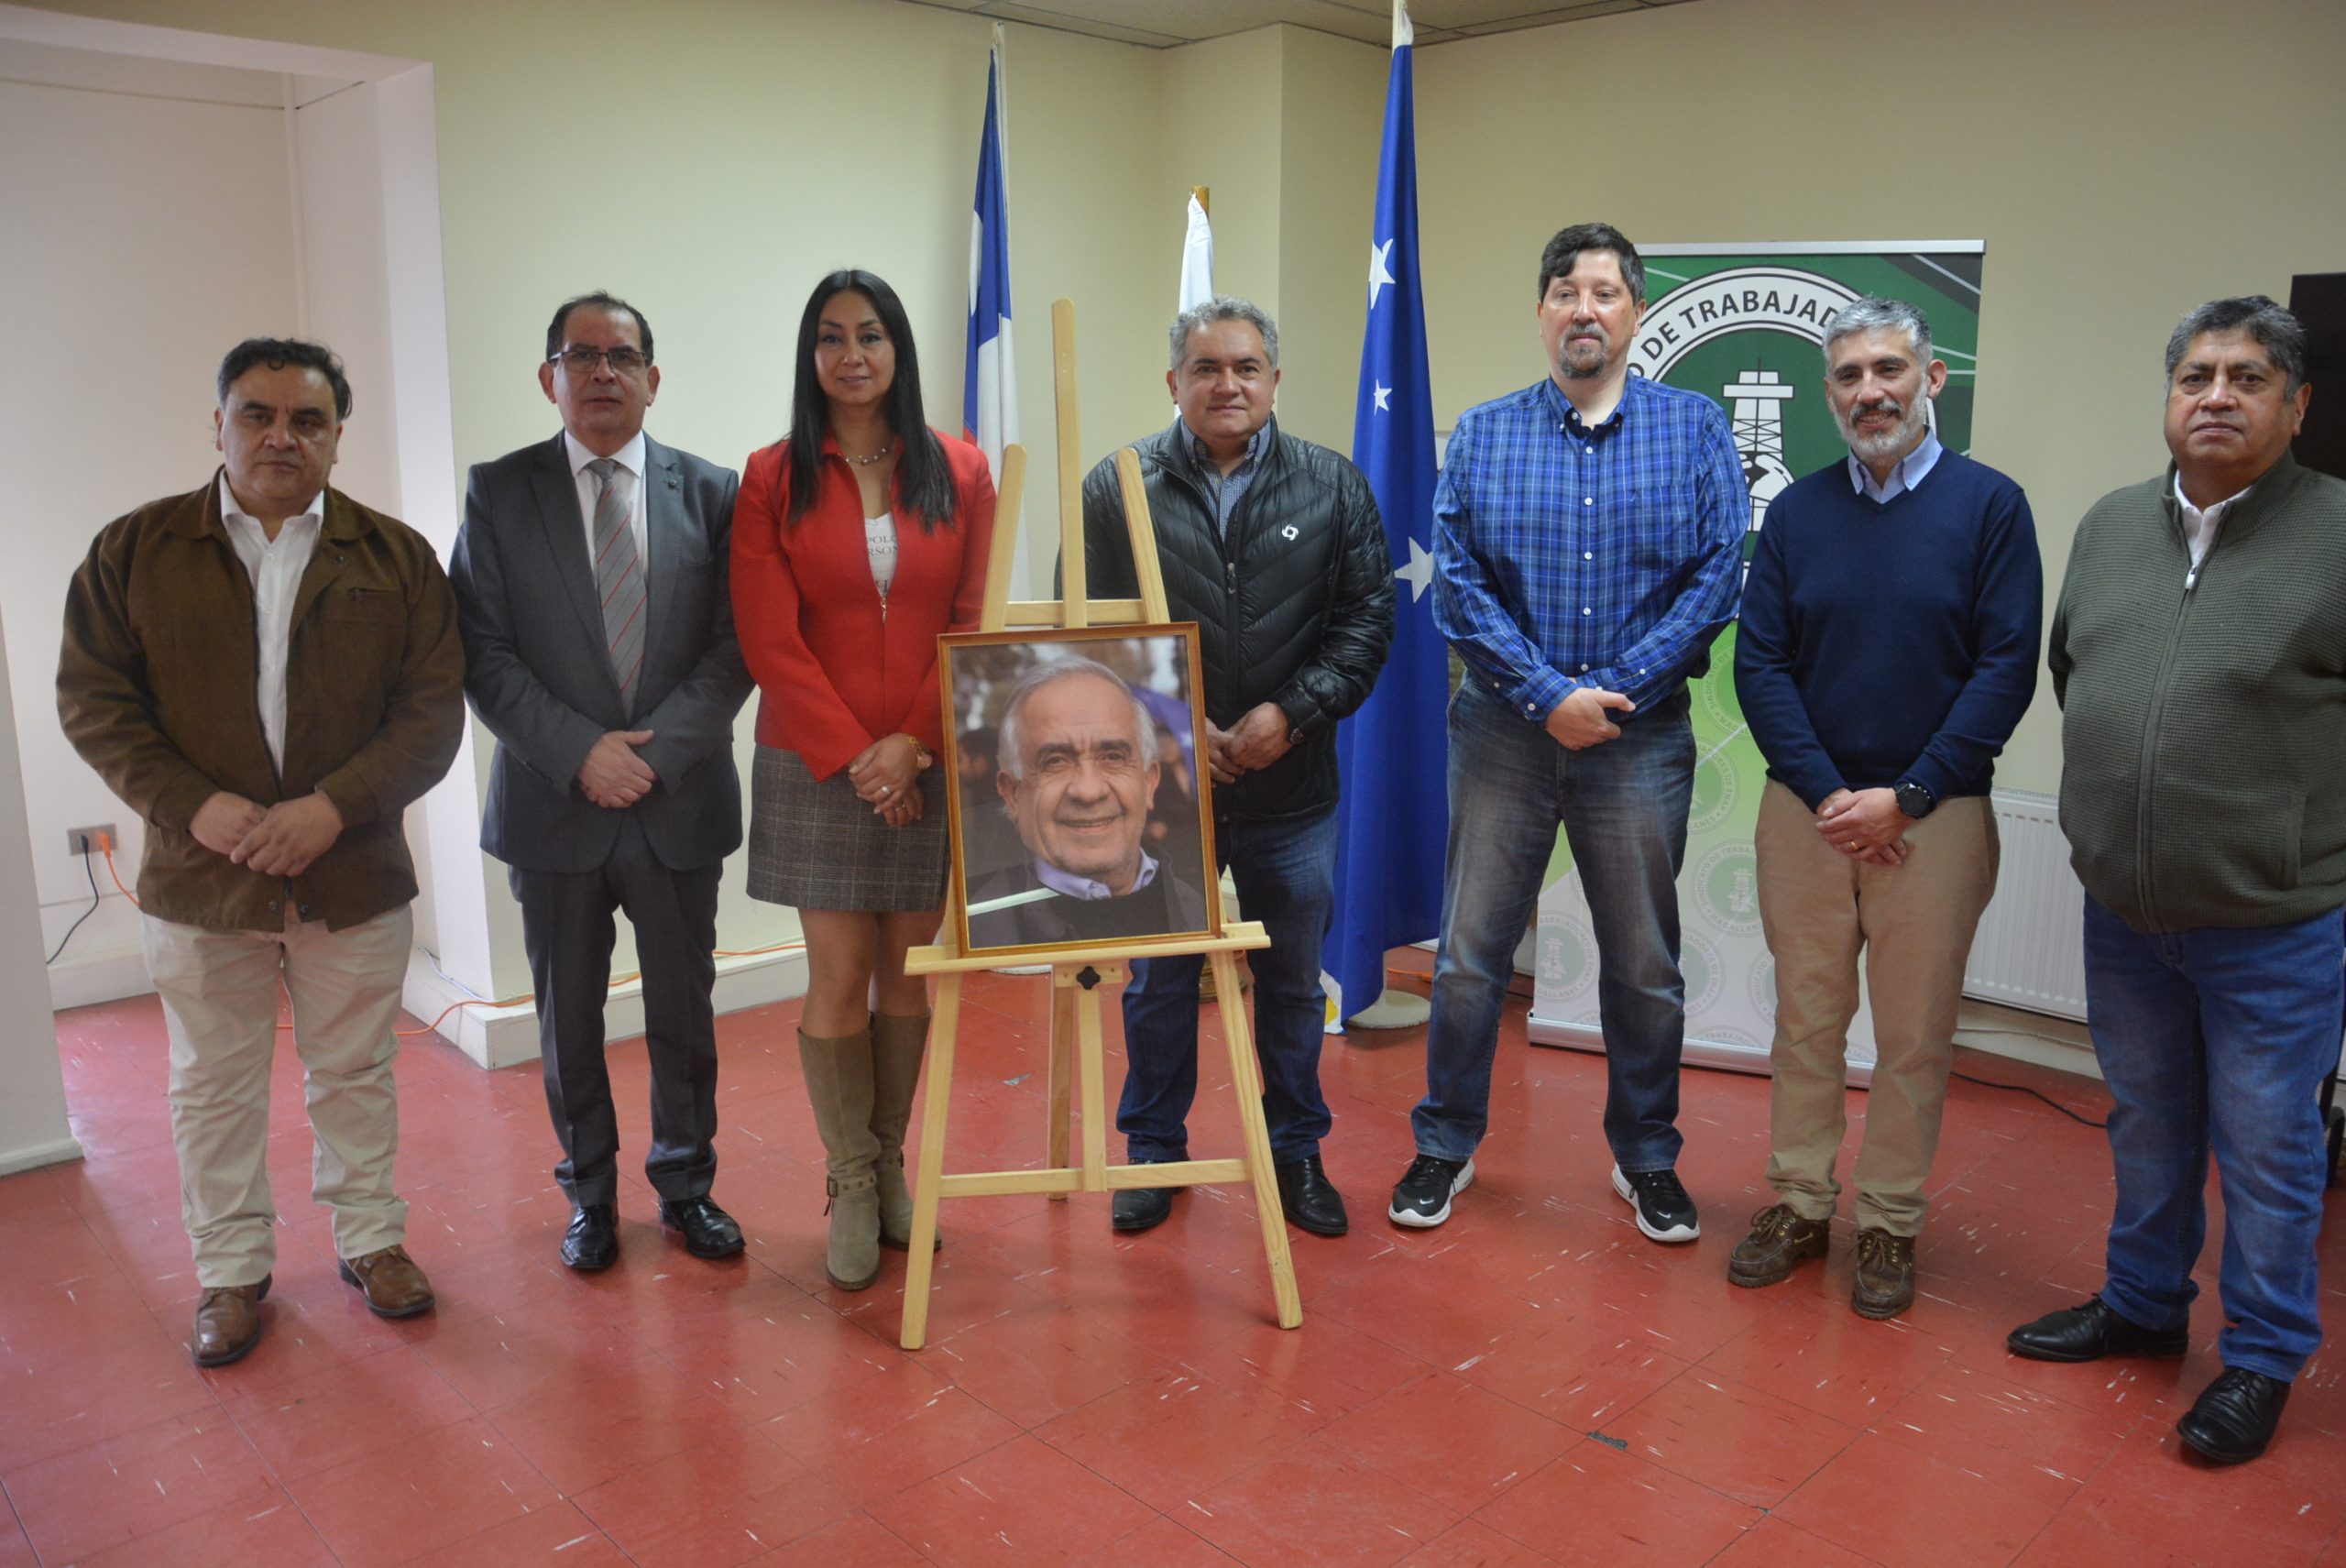 Sindicato de Trabajadores de Enap Magallanes inauguró salón en honor a José Maldonado Q.E.P.D.